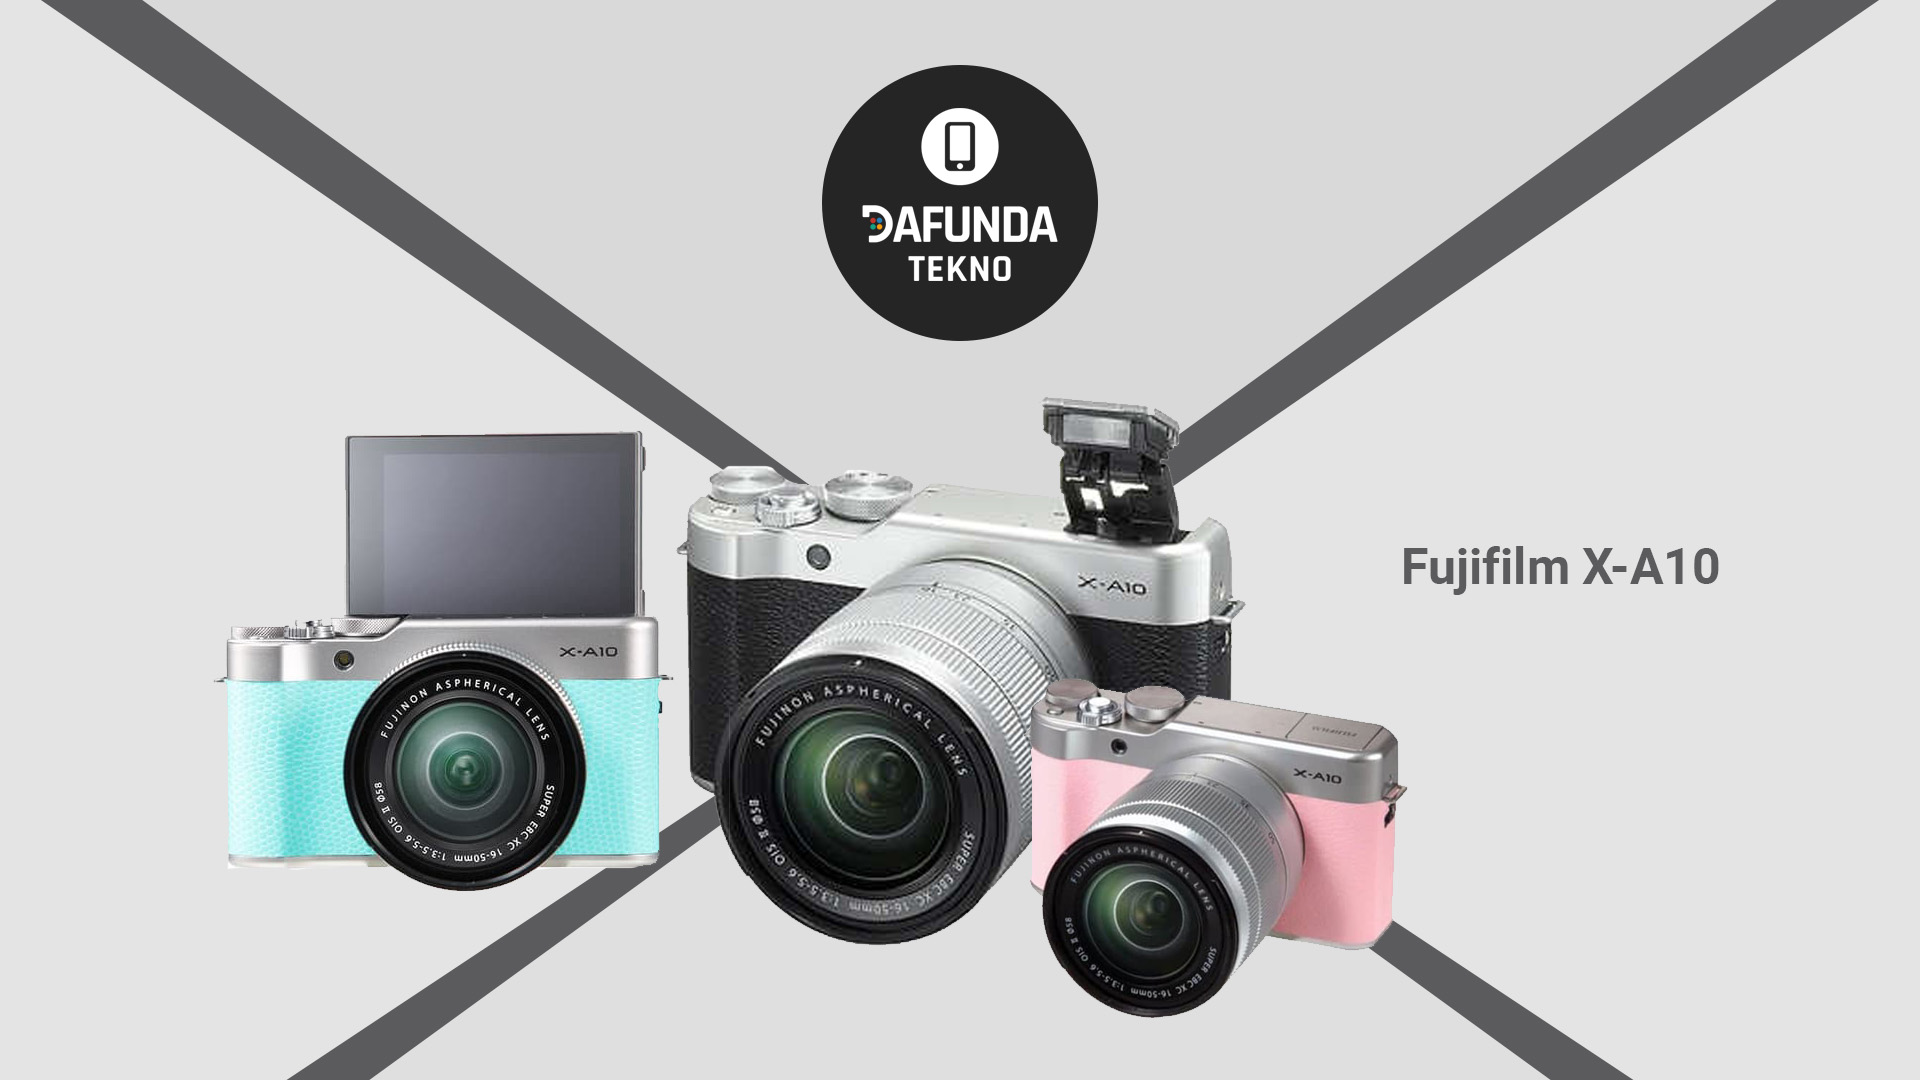 Kamera mirrorless terbaik Fujifilm X A10